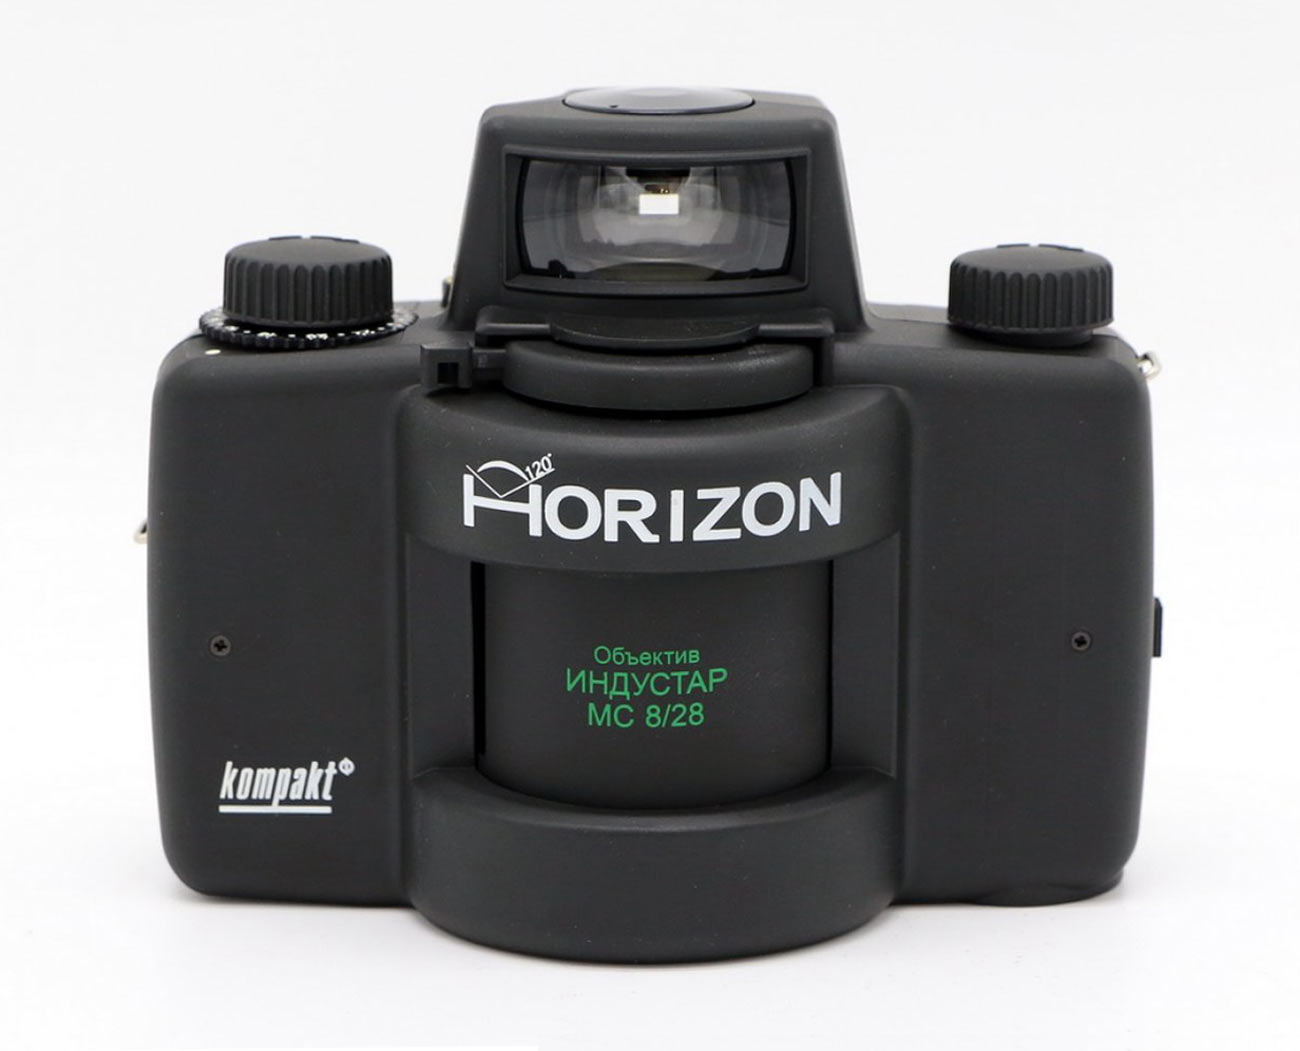 Horizon камера. Фотоаппарат Горизонт 202. Фотоаппарат Горизонт панорамный. Экспортный Горизонт фотоаппарат. Фотоаппарат Горизонт ревю панорамный.